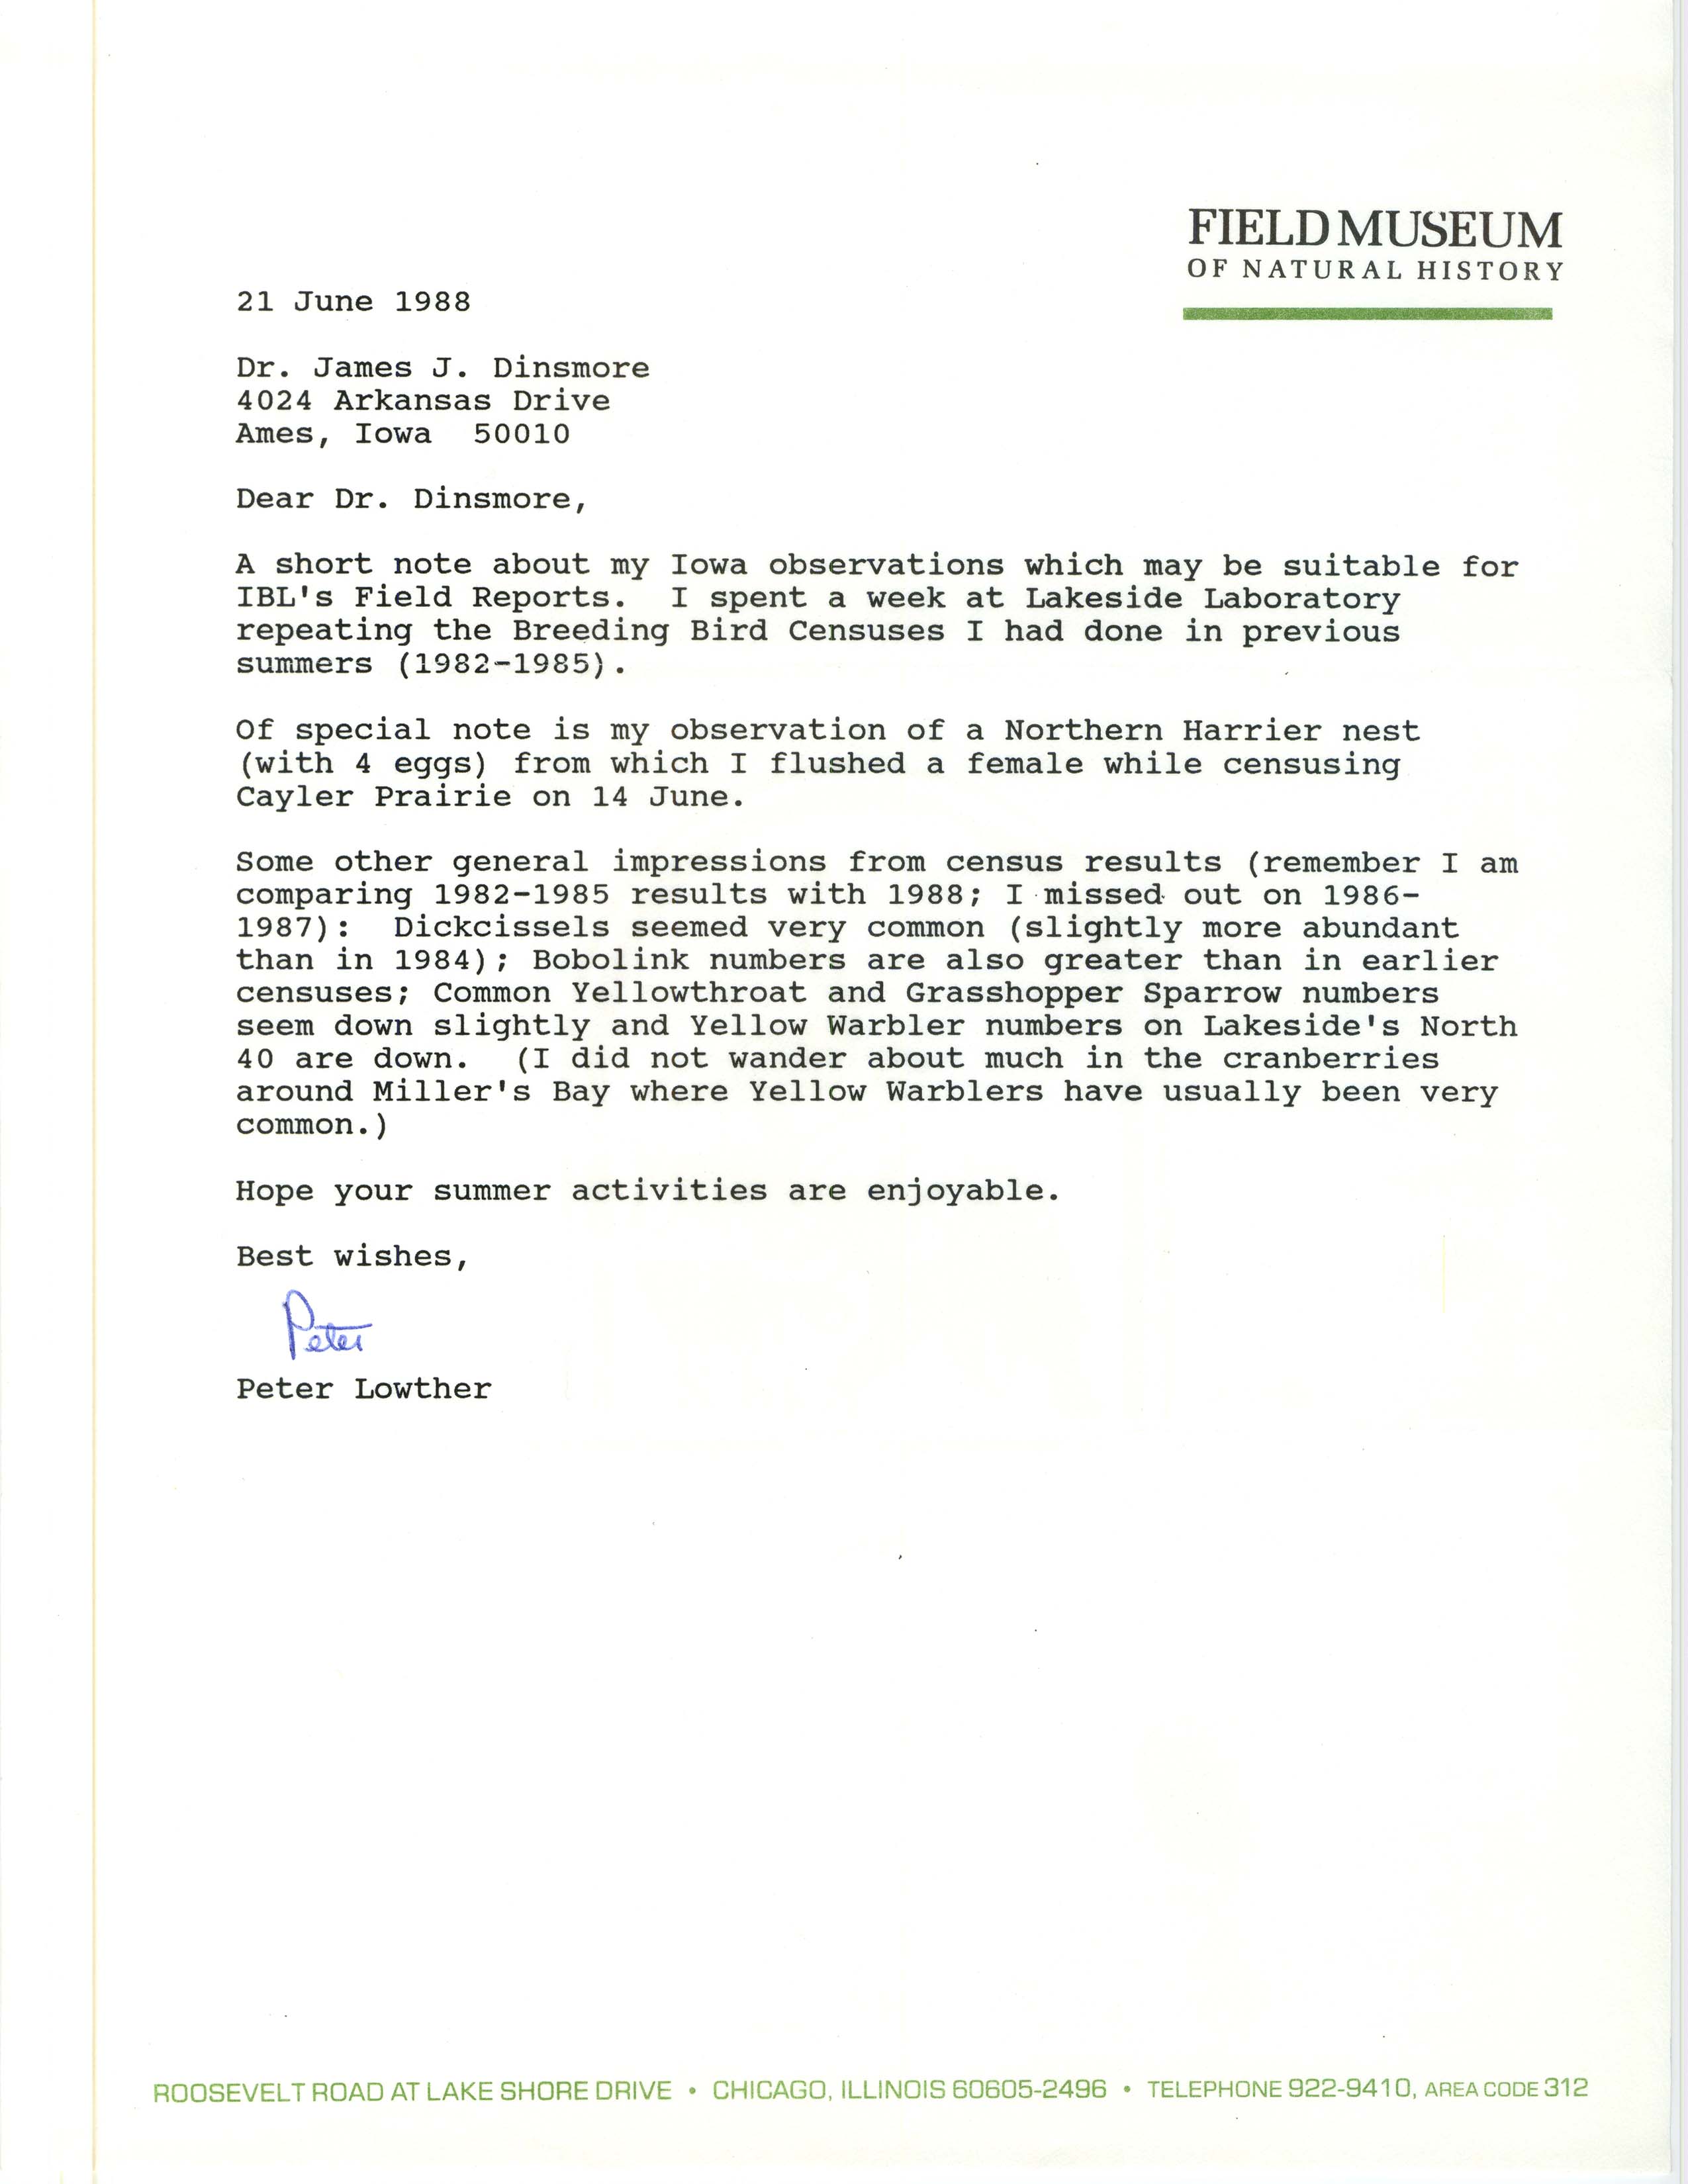 Peter E. Lowther letter to James J. Dinsmore regarding bird sightings, June 21, 1988